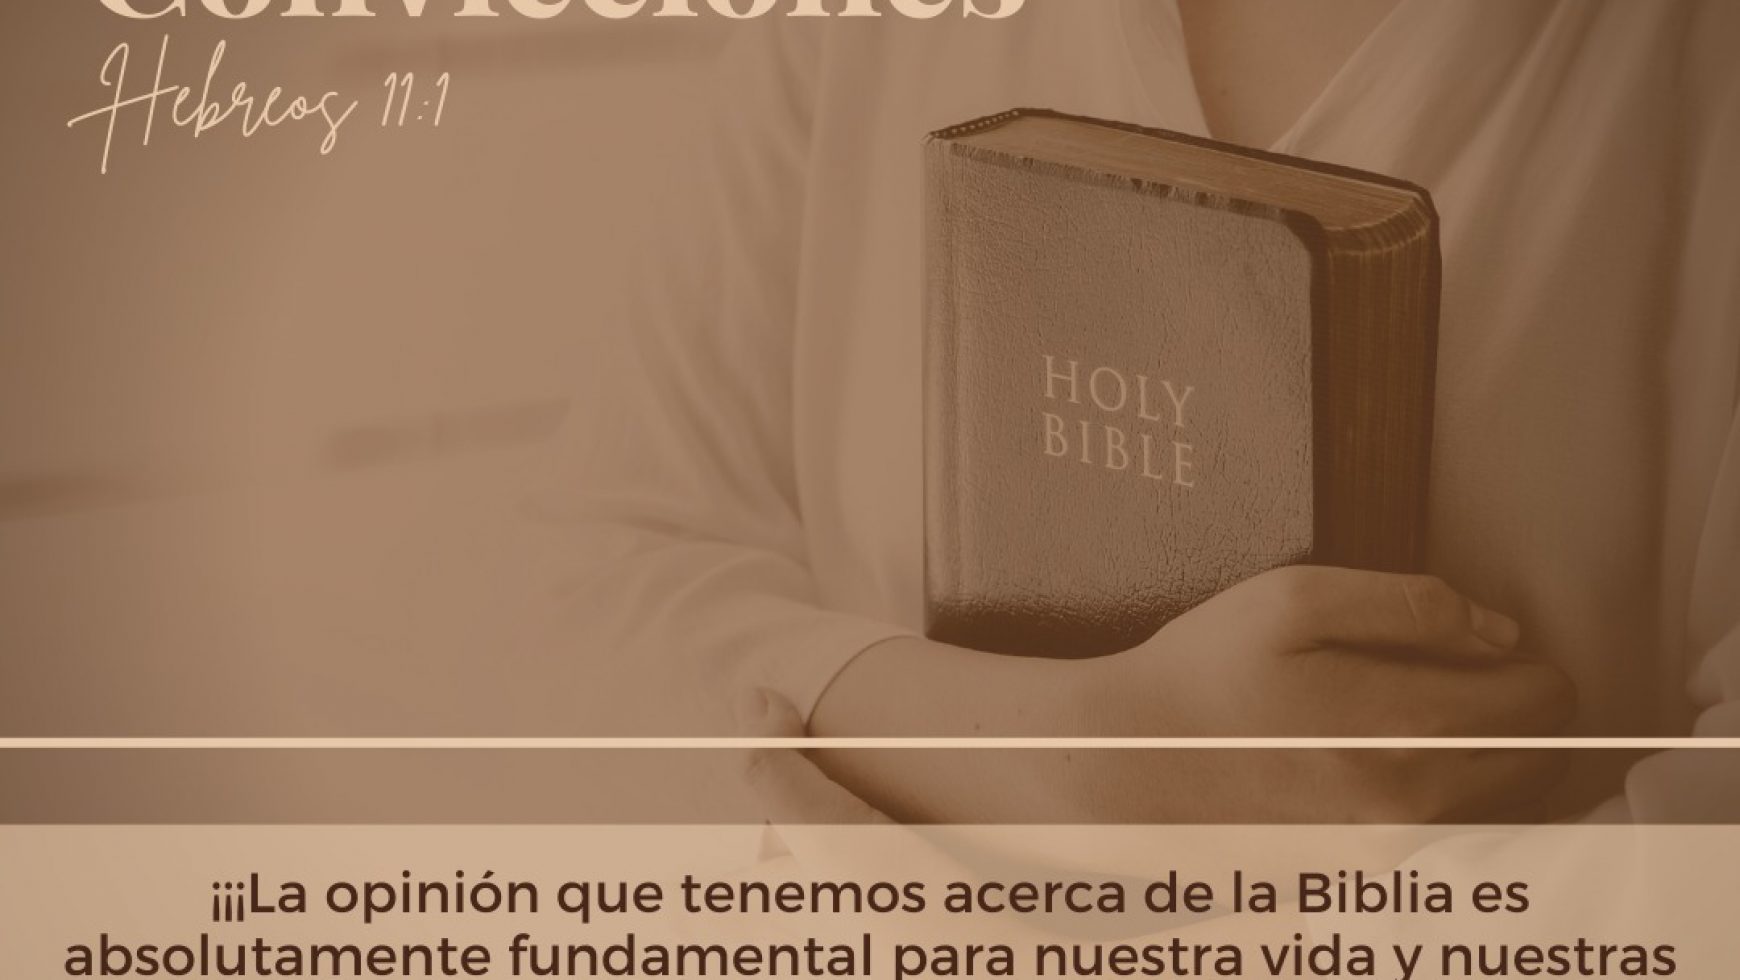 BIBLIA & CONVICCIONES